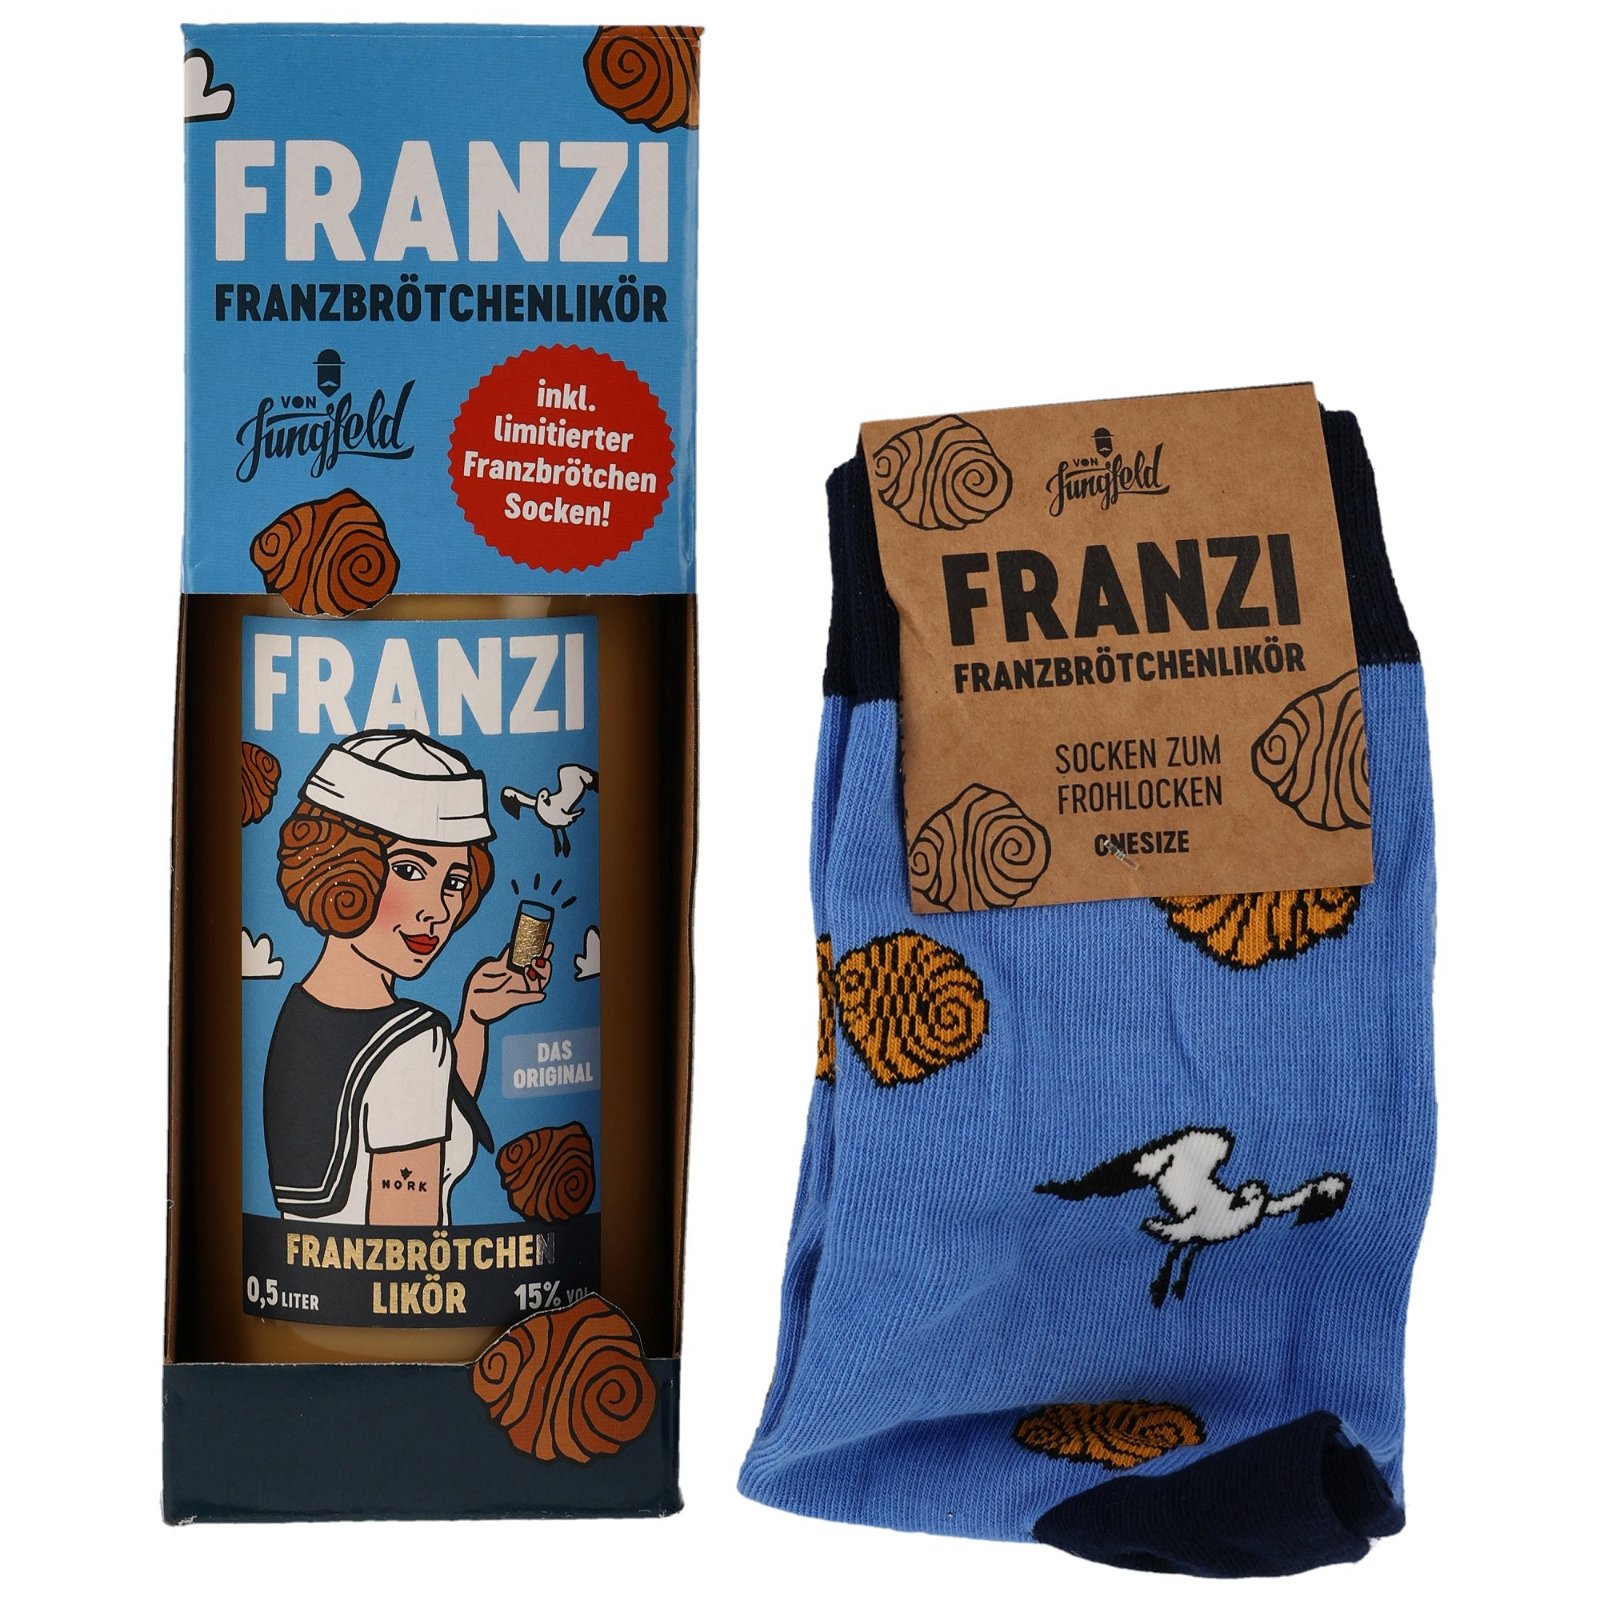 Franzi Franzbrötchenlikör Set mit Socken